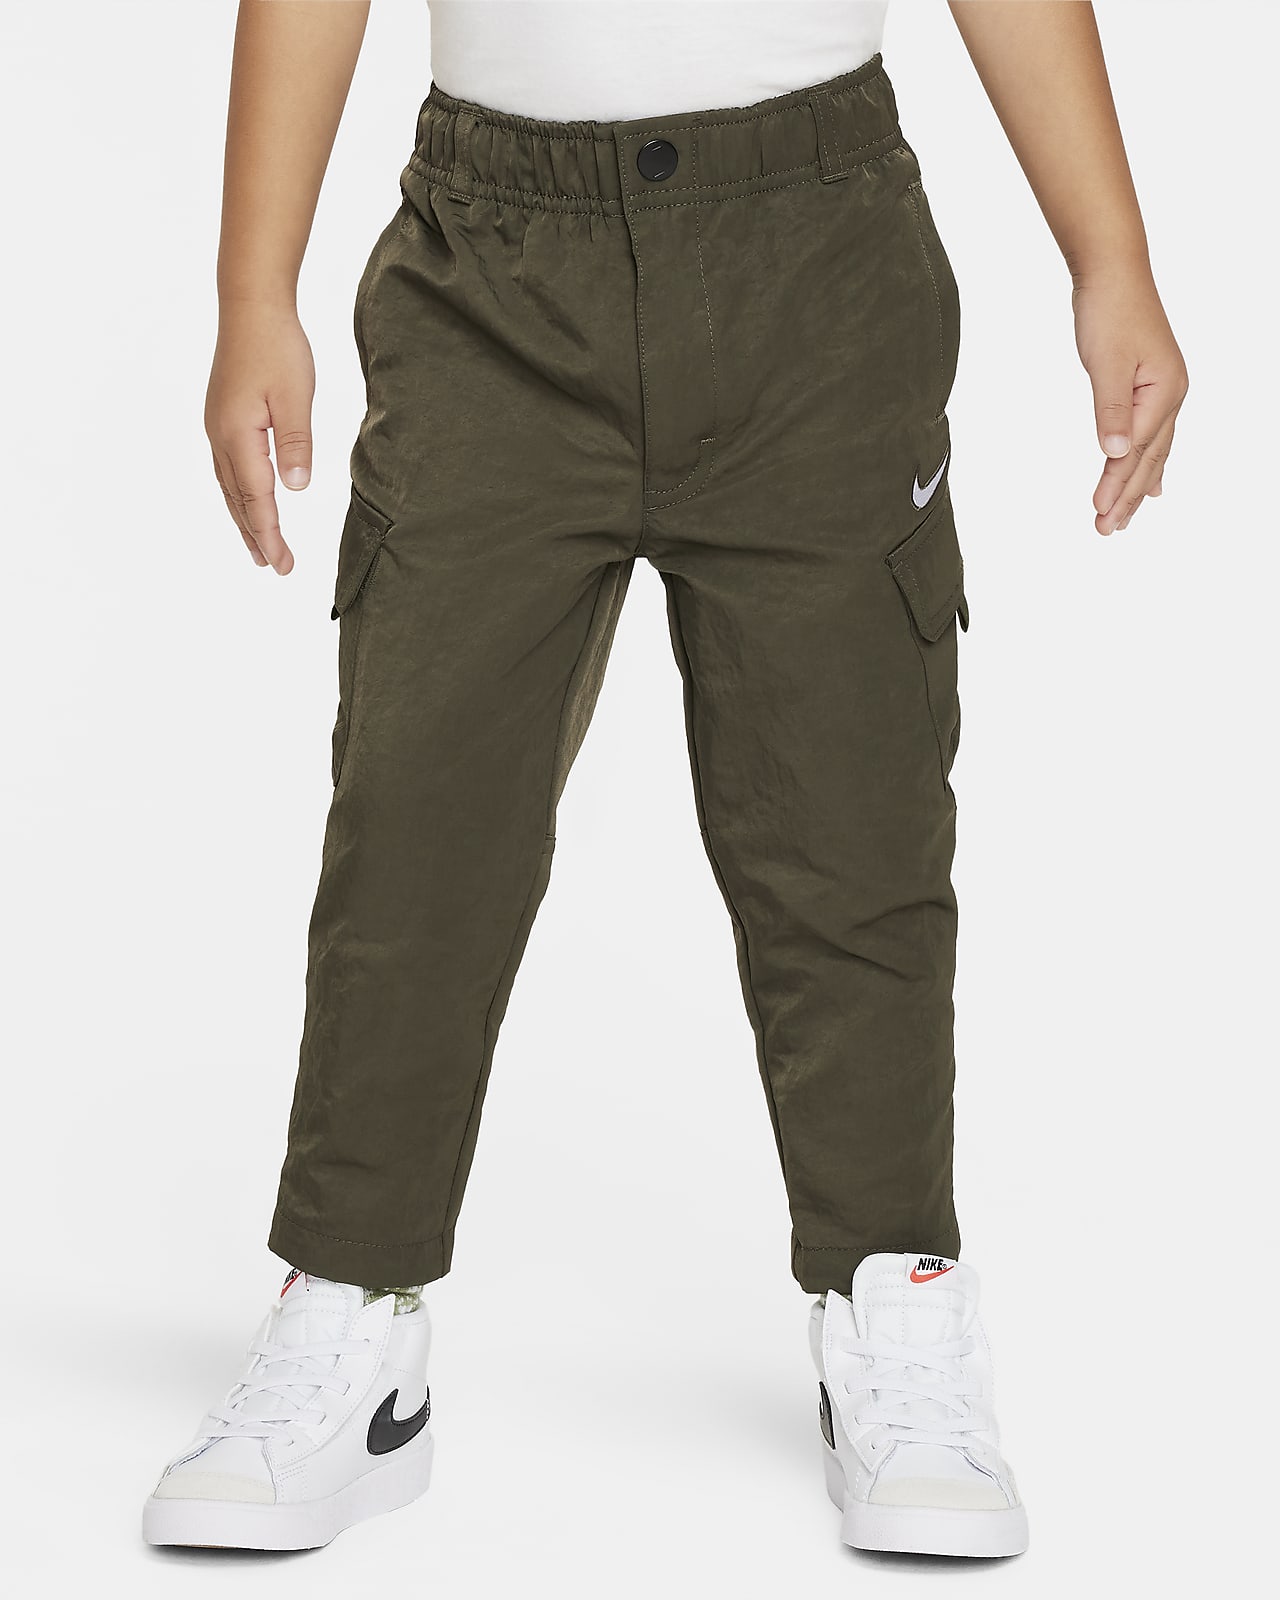 Pants infantil Nike Woven Cargo Pants